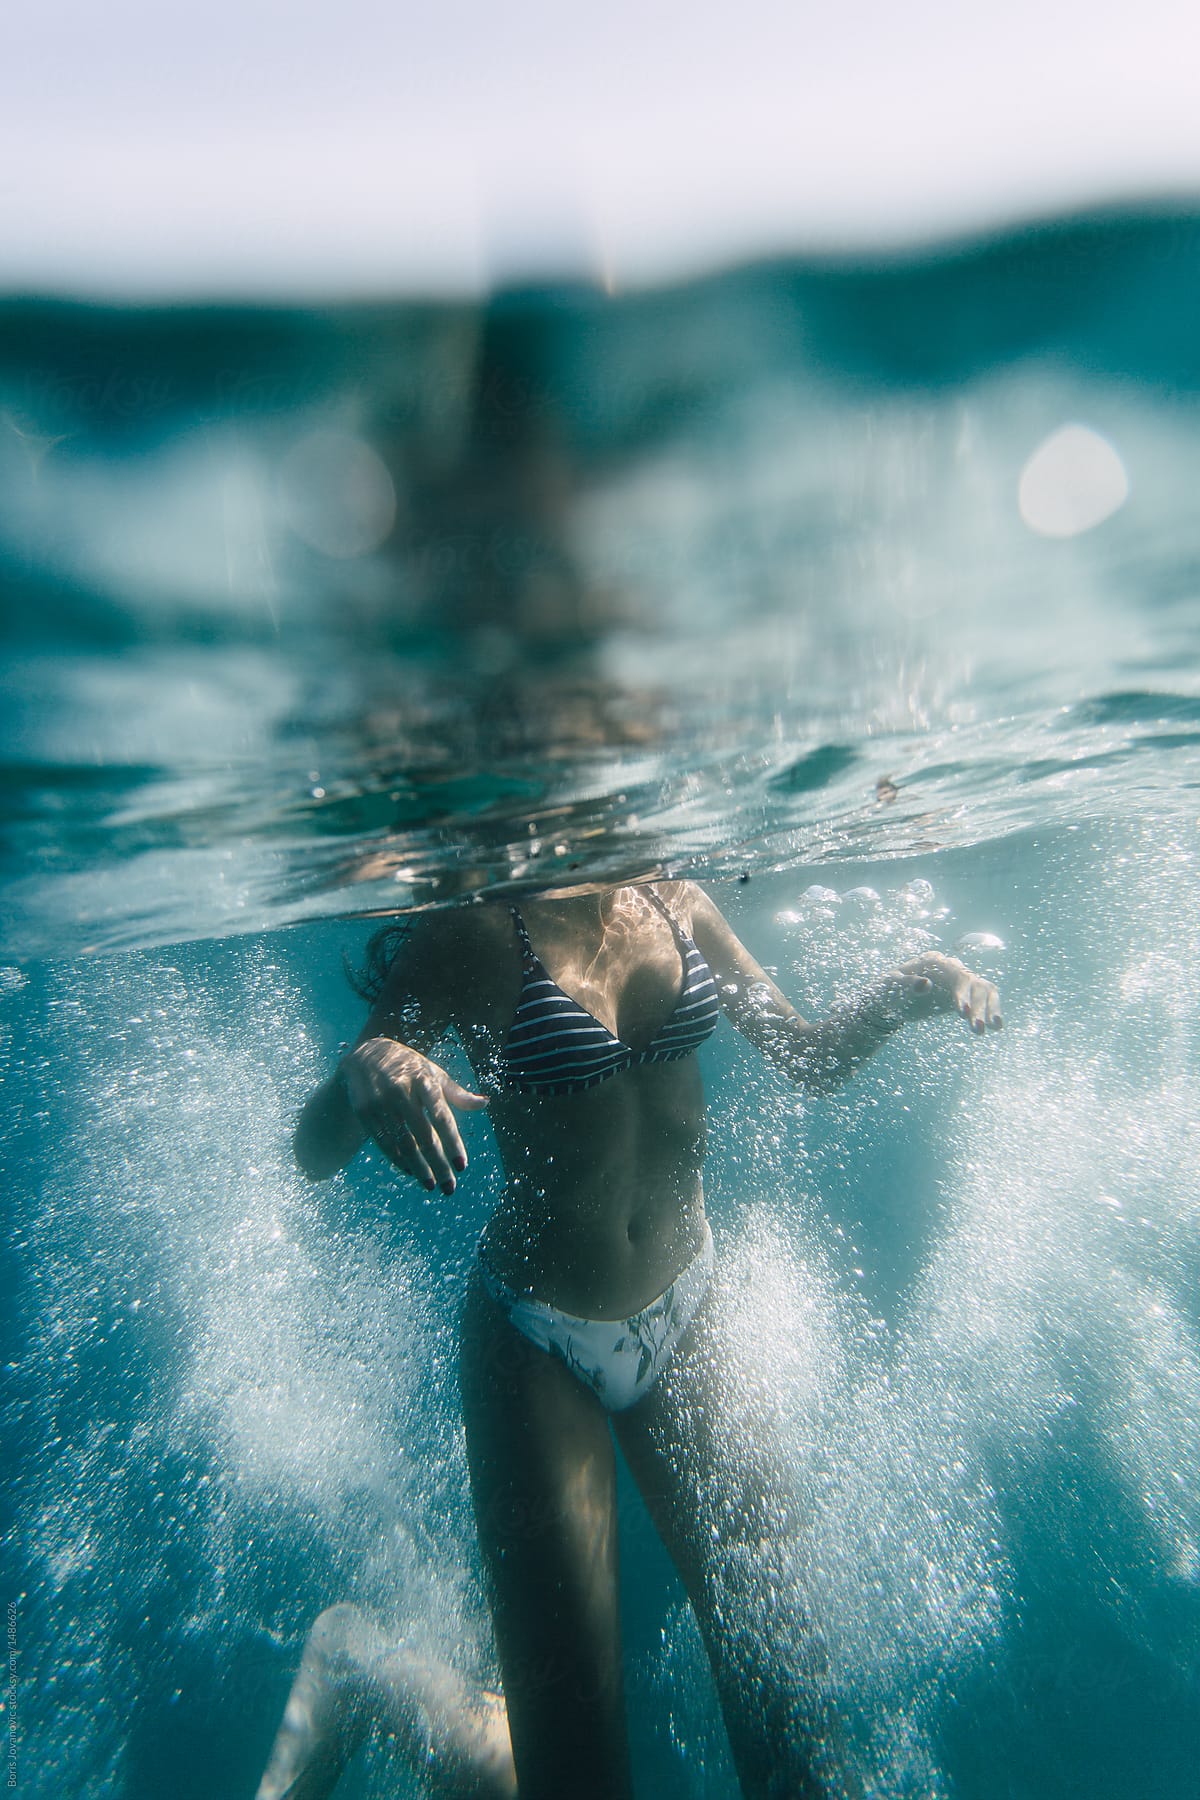 Crop Woman Wetting Legs In Sea Water by Stocksy Contributor BONNINSTUDIO   - Stocksy